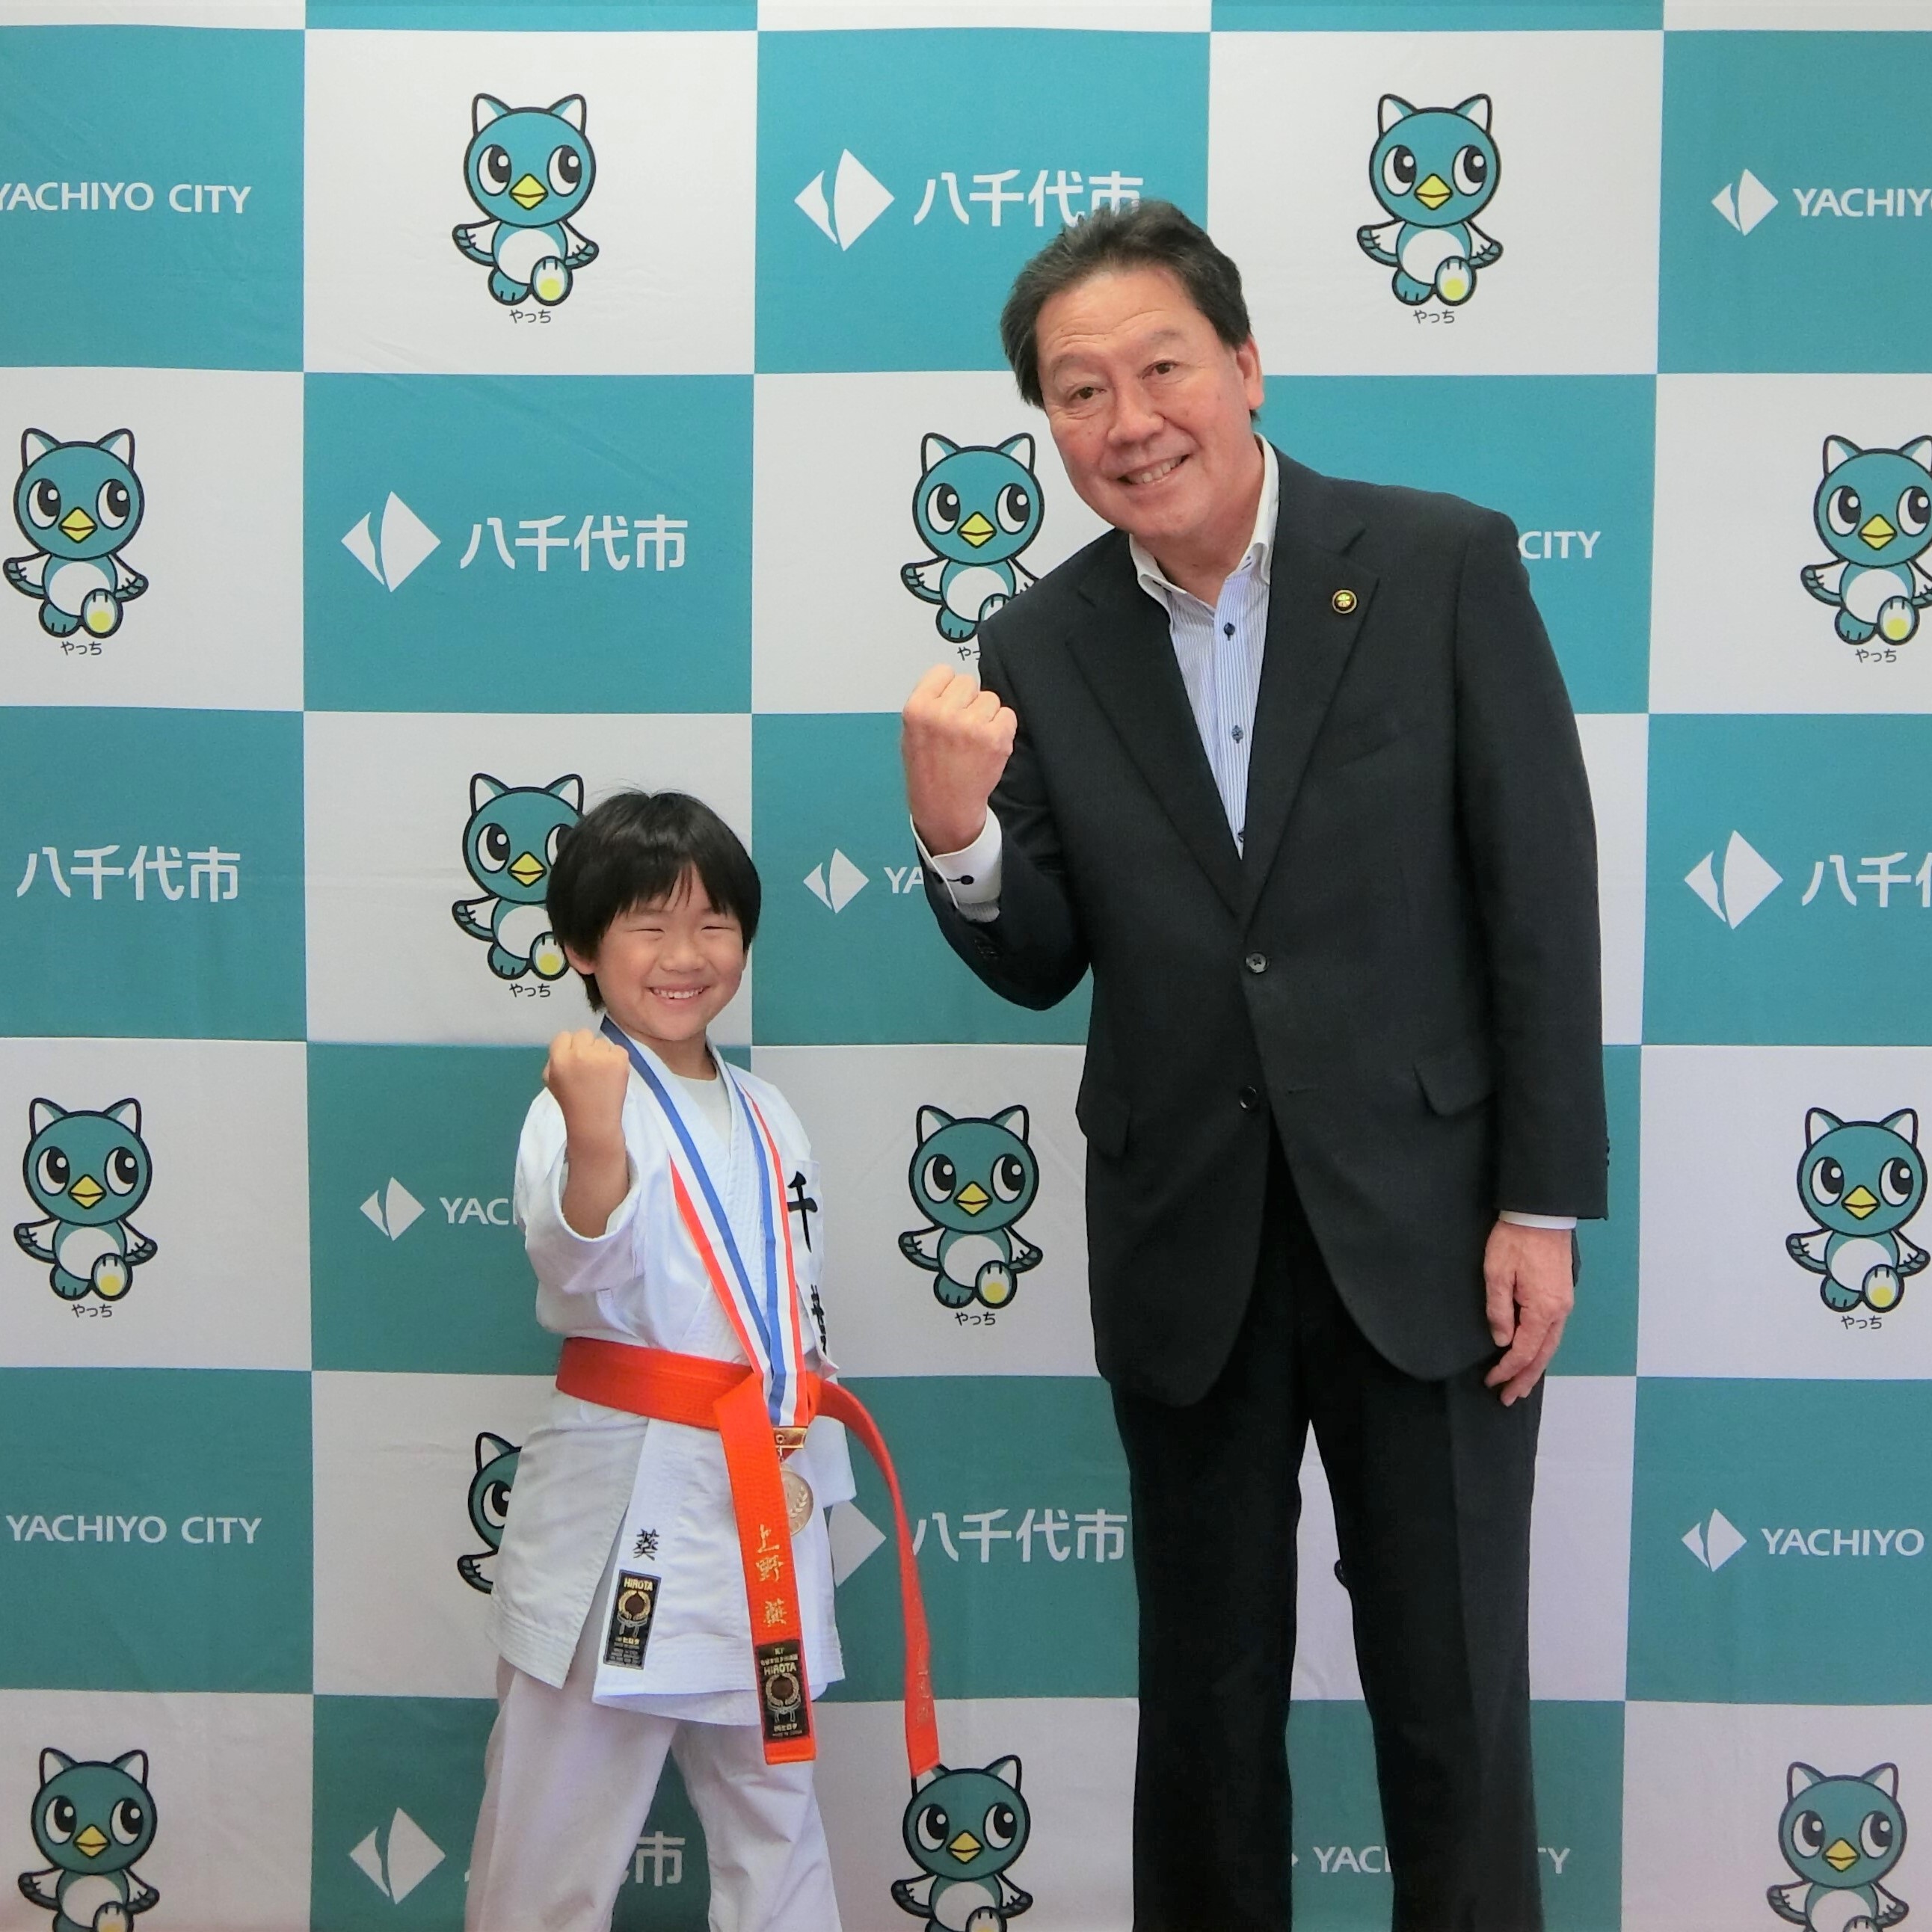 上野葵選手と市長